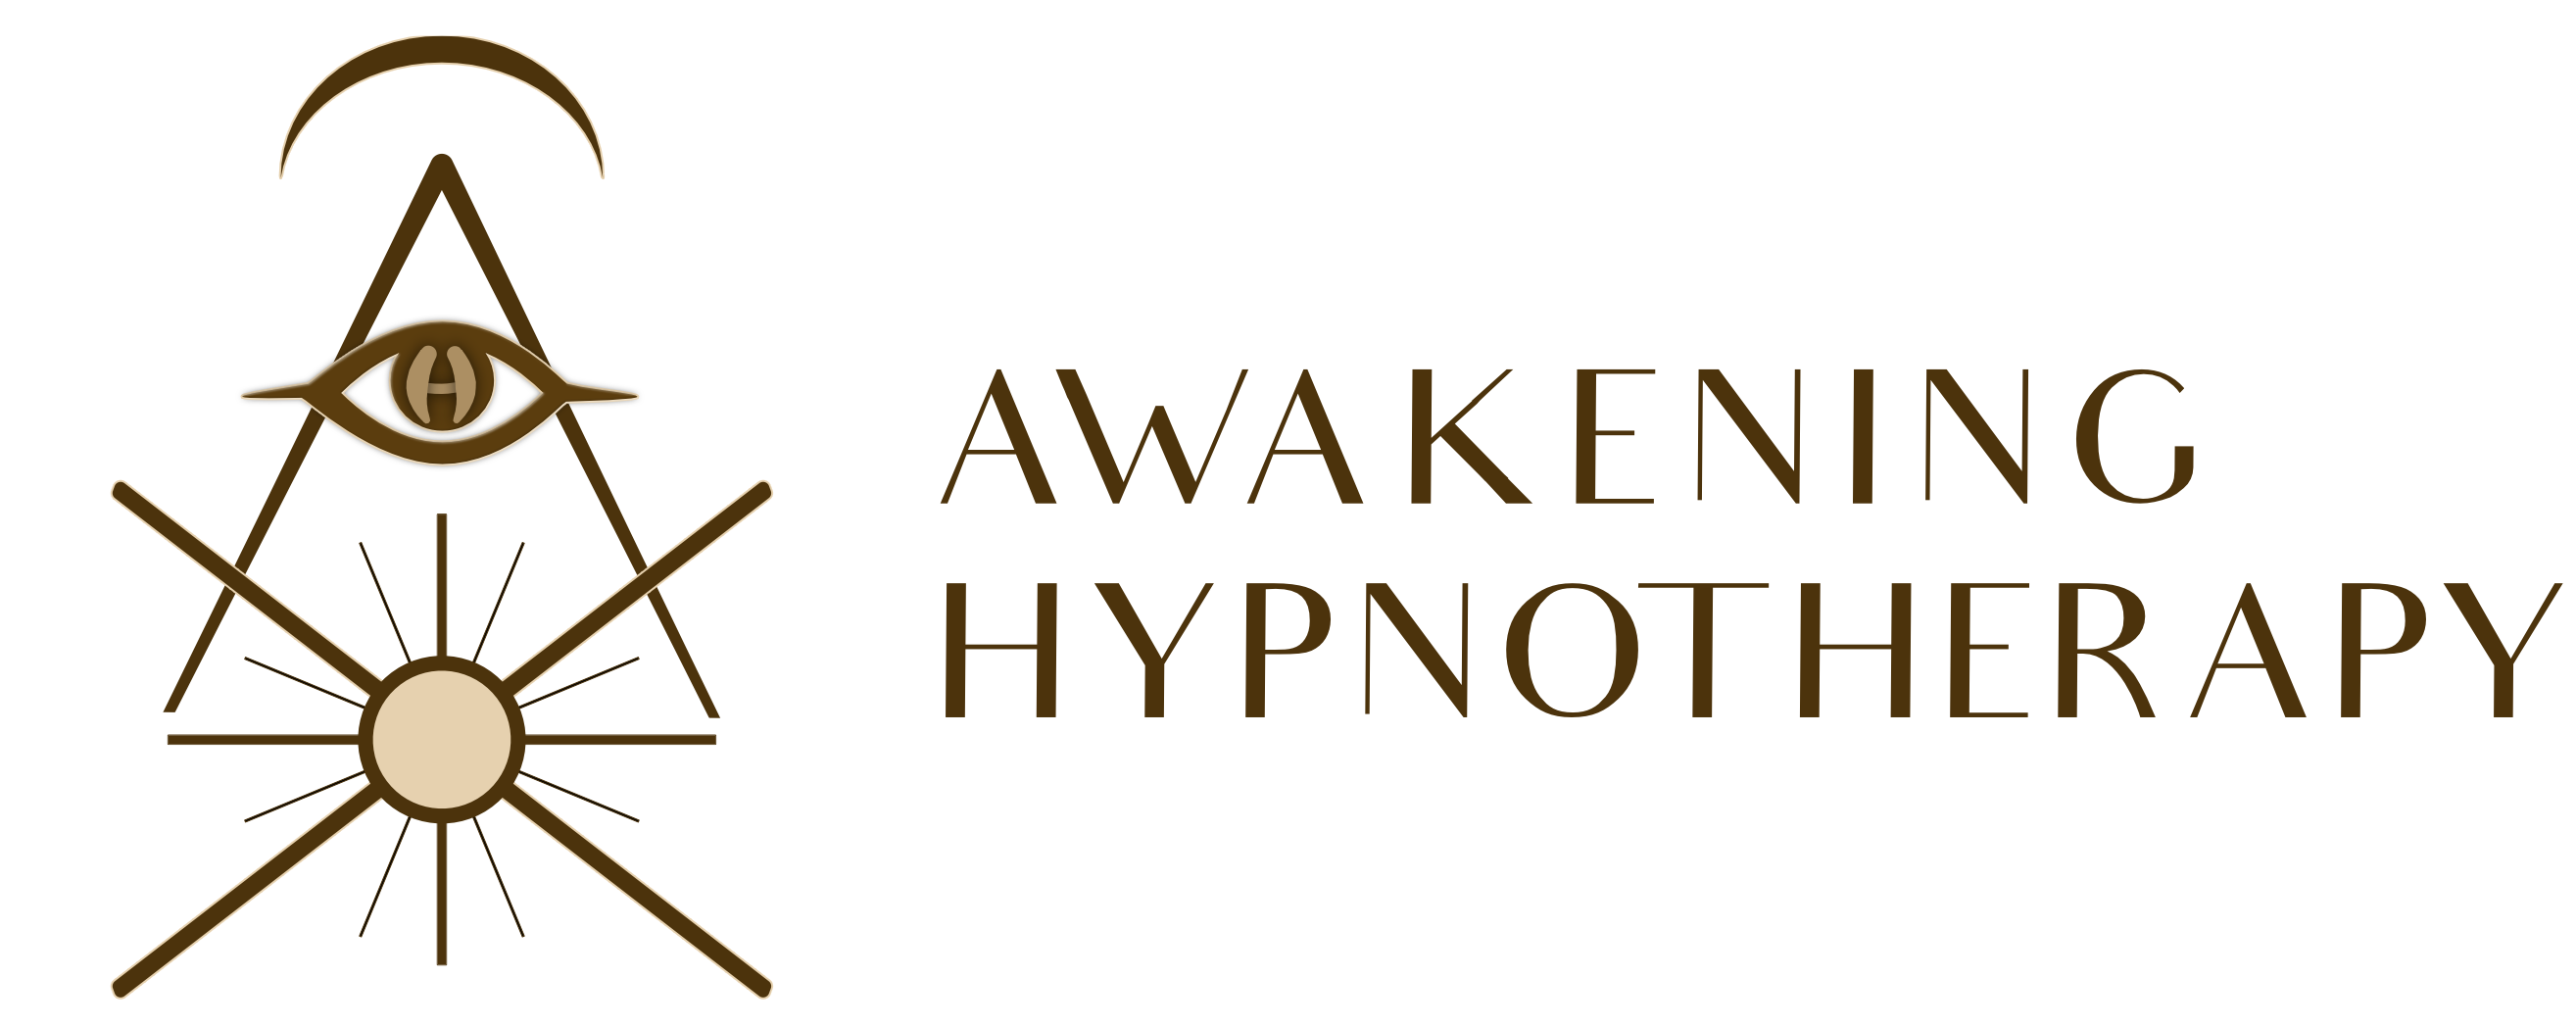 Awakening Hypnotherapy